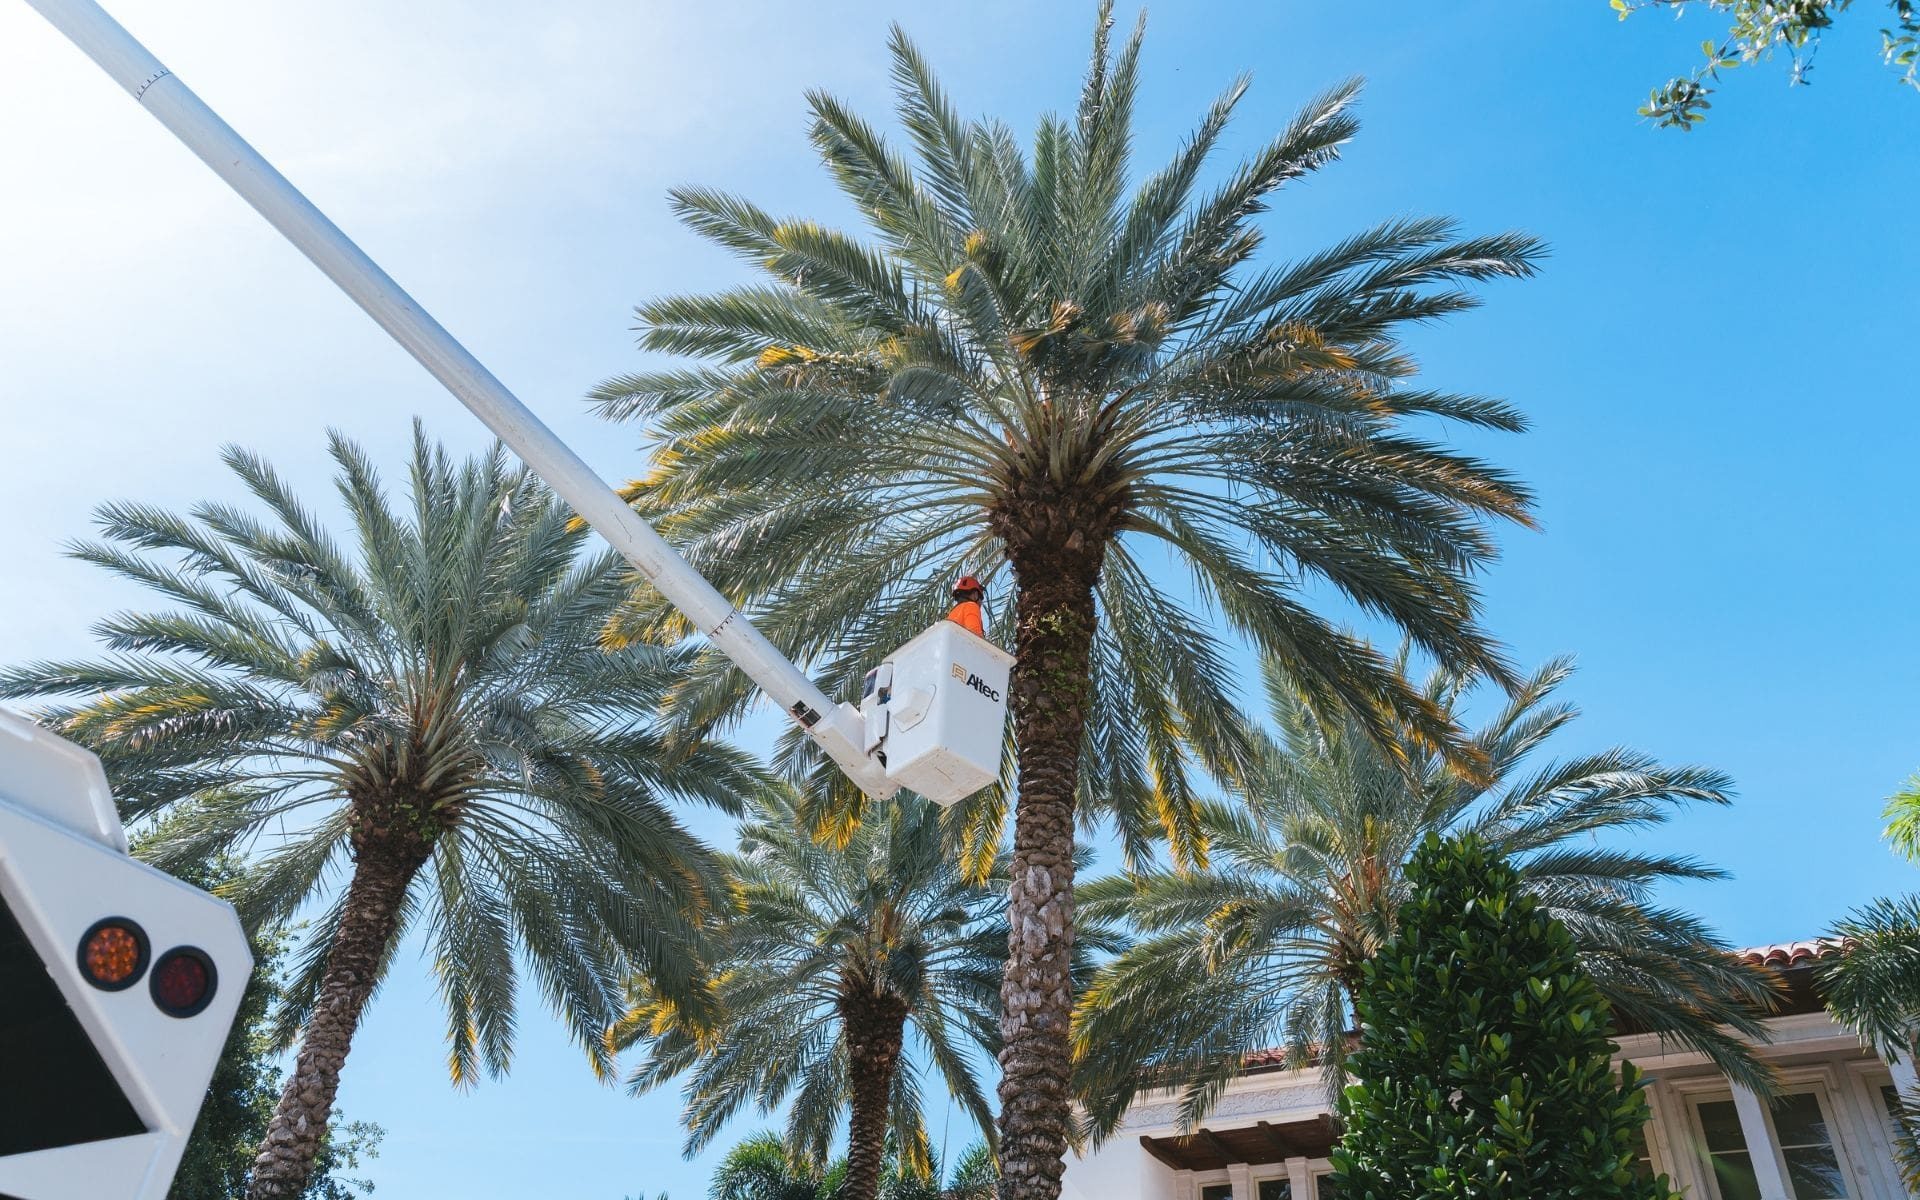 A Sherlock Tree crew member inspects palm trees from a bucket truck.